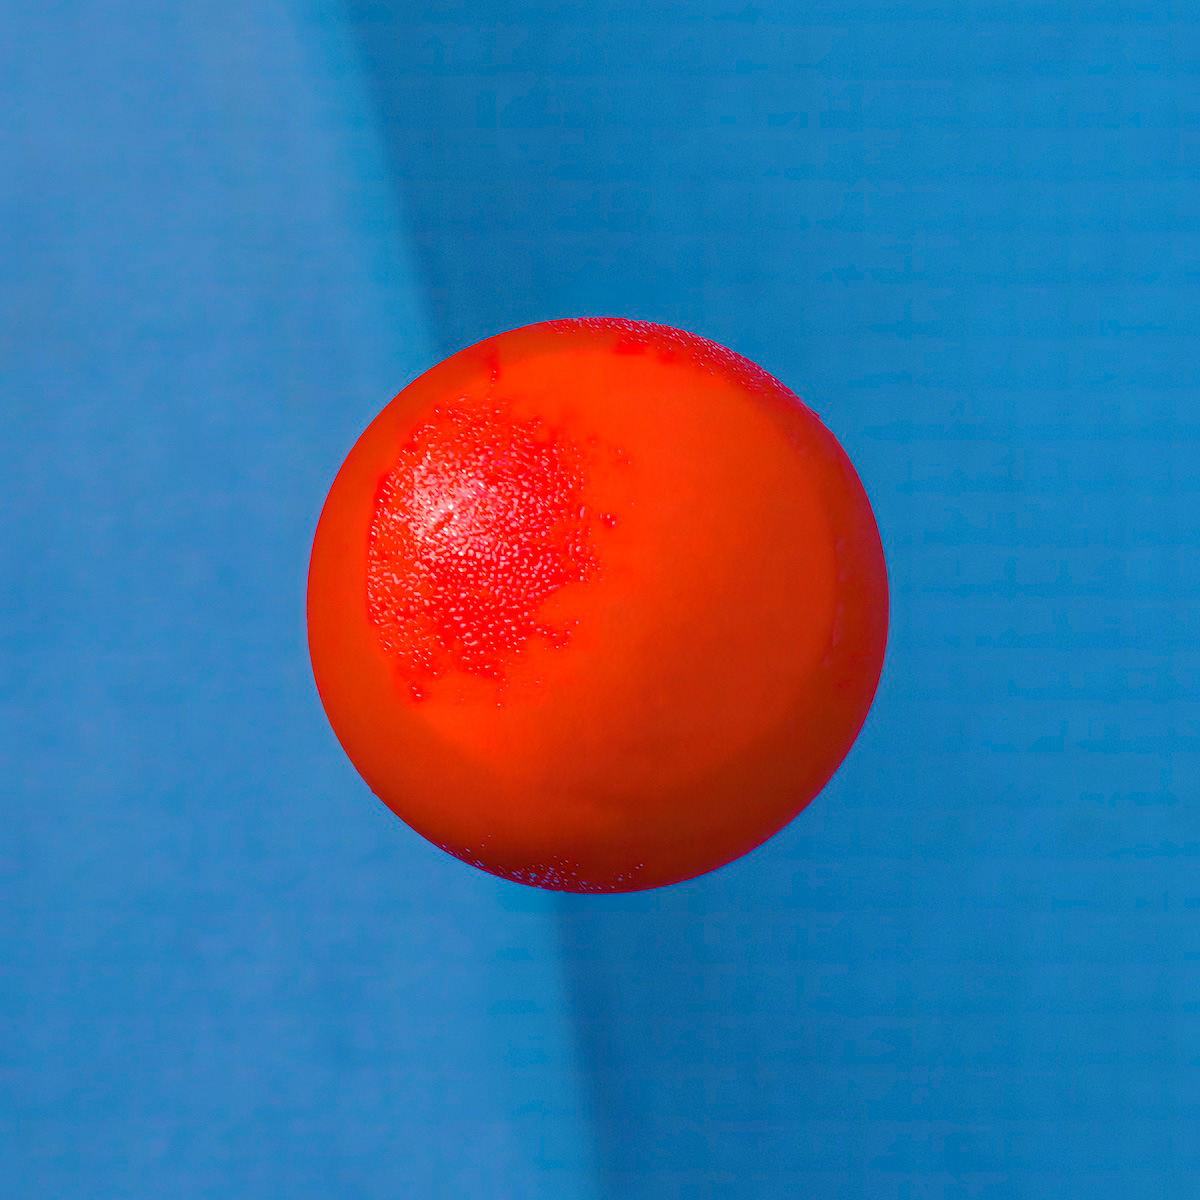 Red Ball’s Ascent J<p>© Lynn Savarese</p>